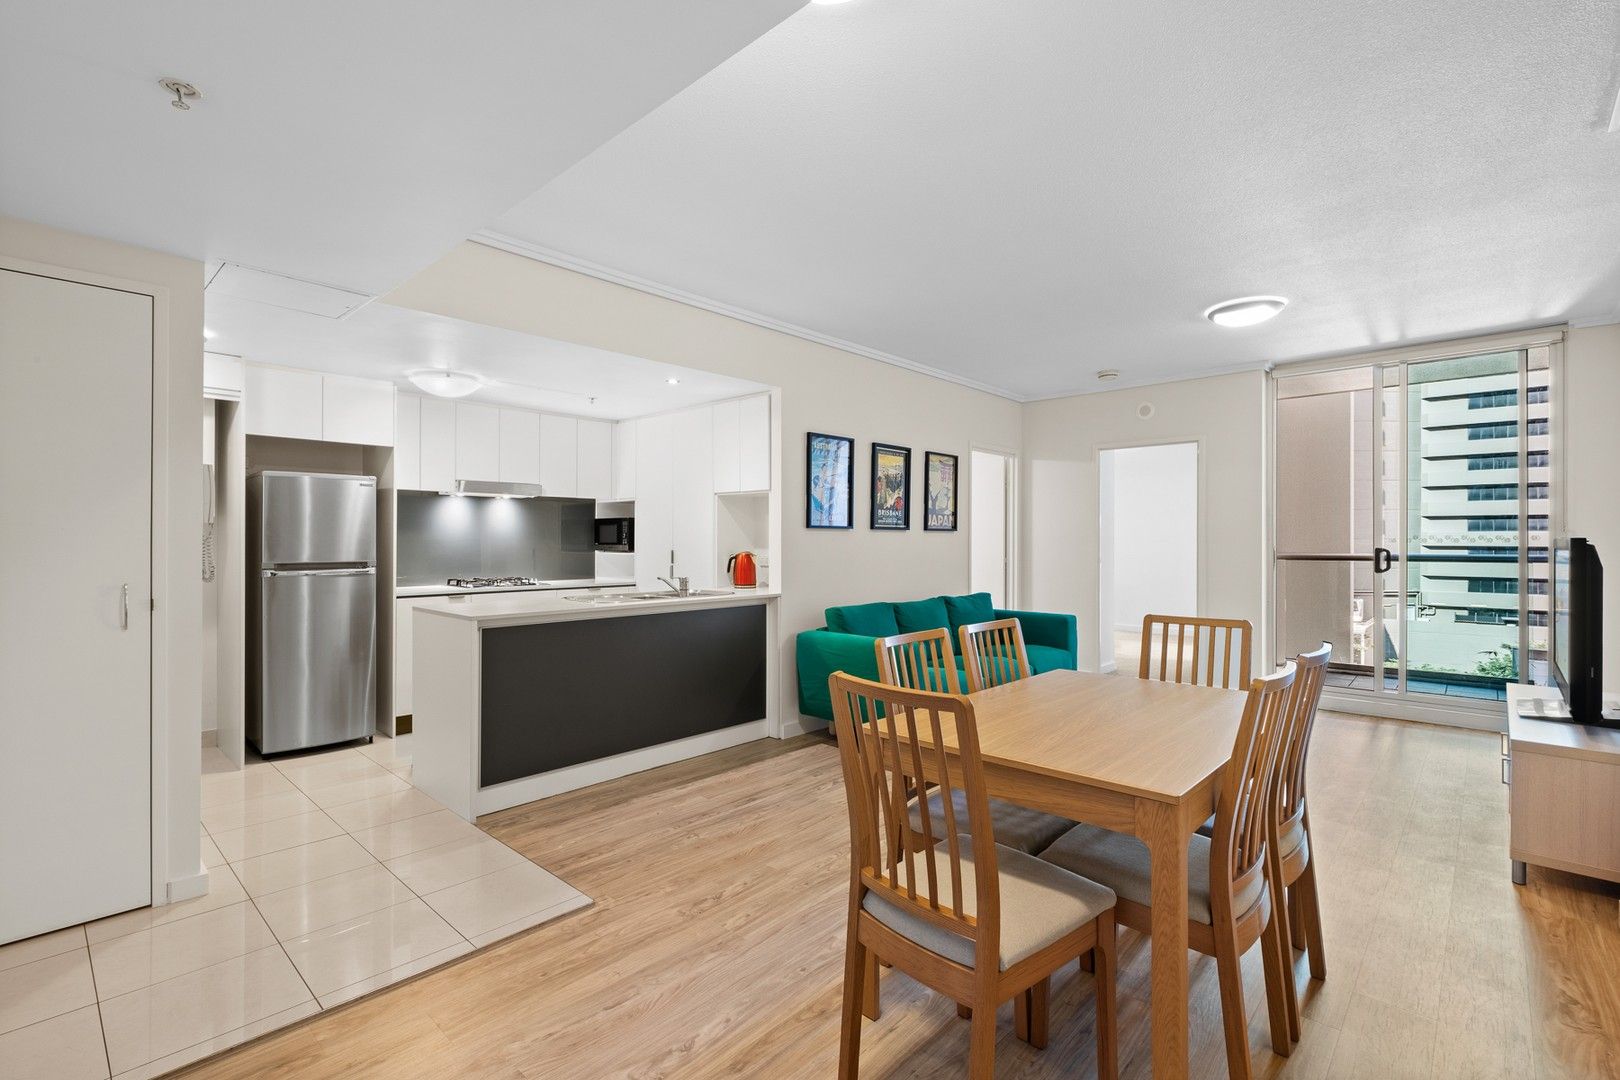 2 bedrooms Apartment / Unit / Flat in 608/108 Albert Street BRISBANE CITY QLD, 4000